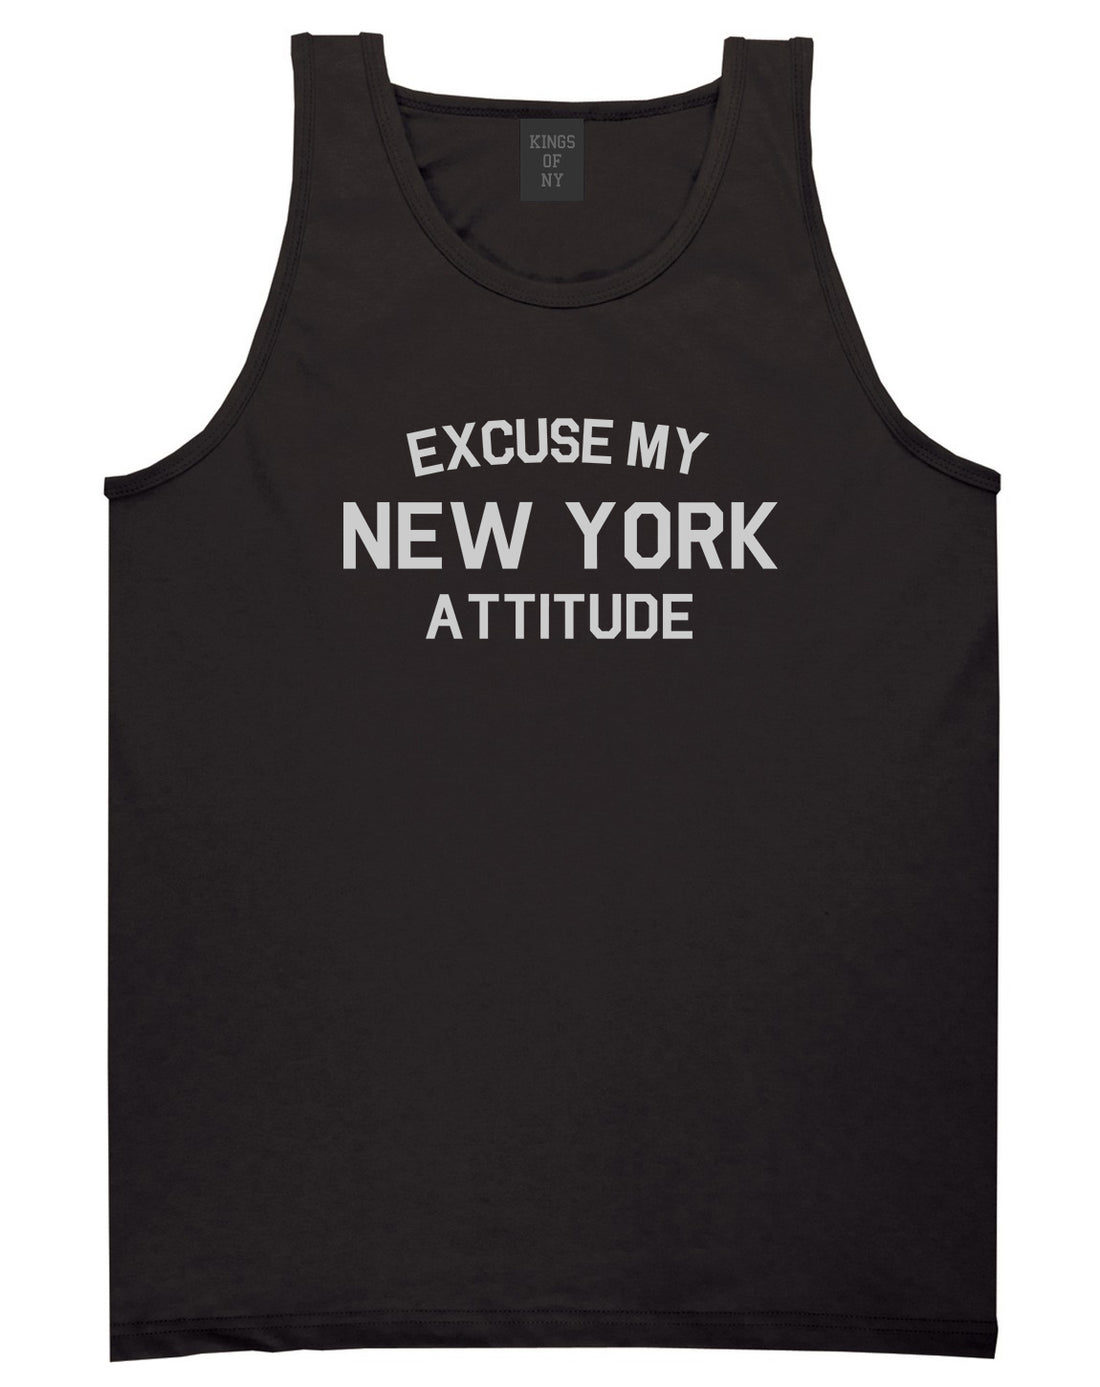 Excuse My New York Attitude Mens Tank Top Shirt Black